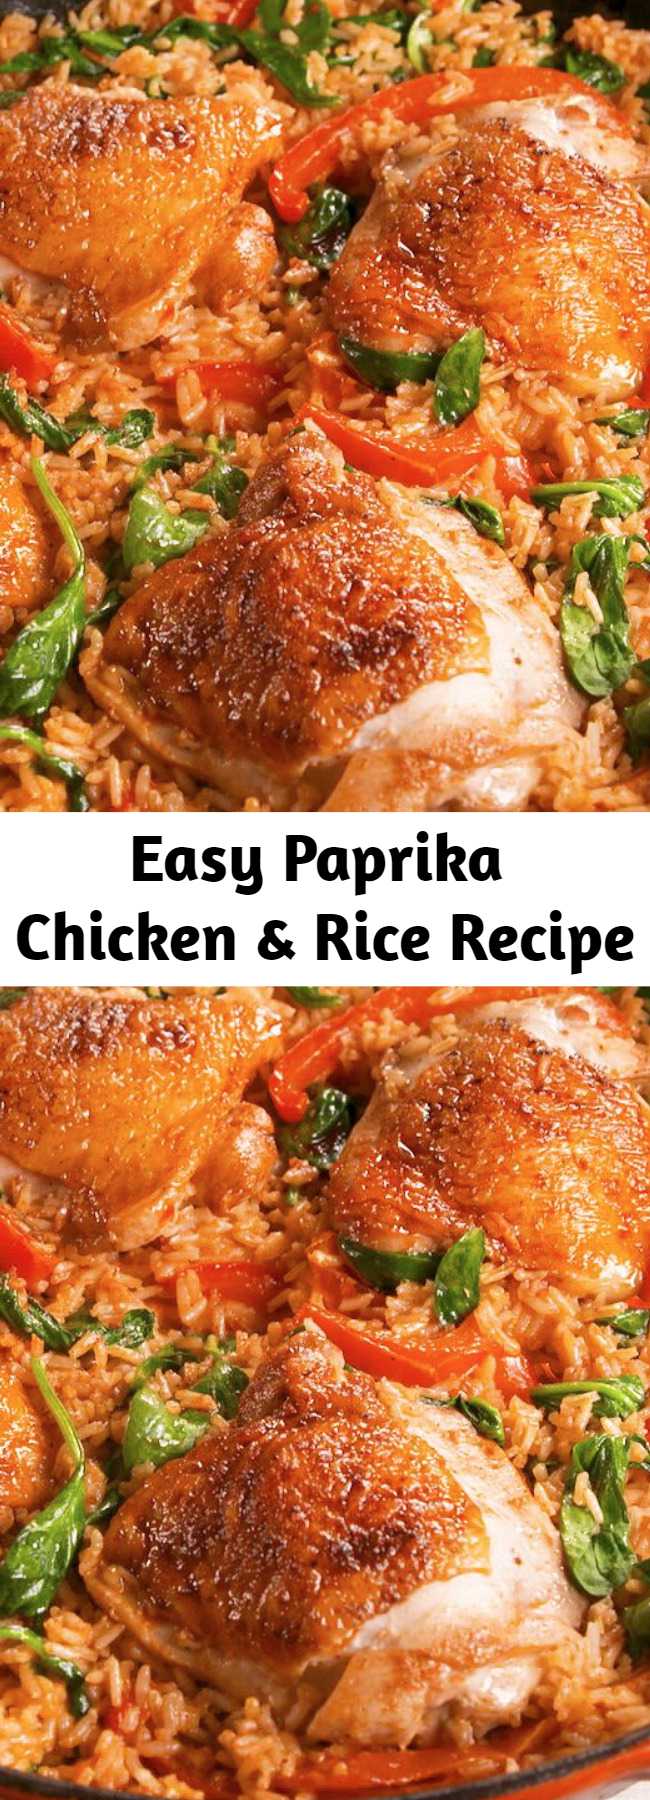 Easy Paprika Chicken & Rice Recipe - Weeknight dinner all-star. #food #easyrecipe #dinner #familydinner #chicken